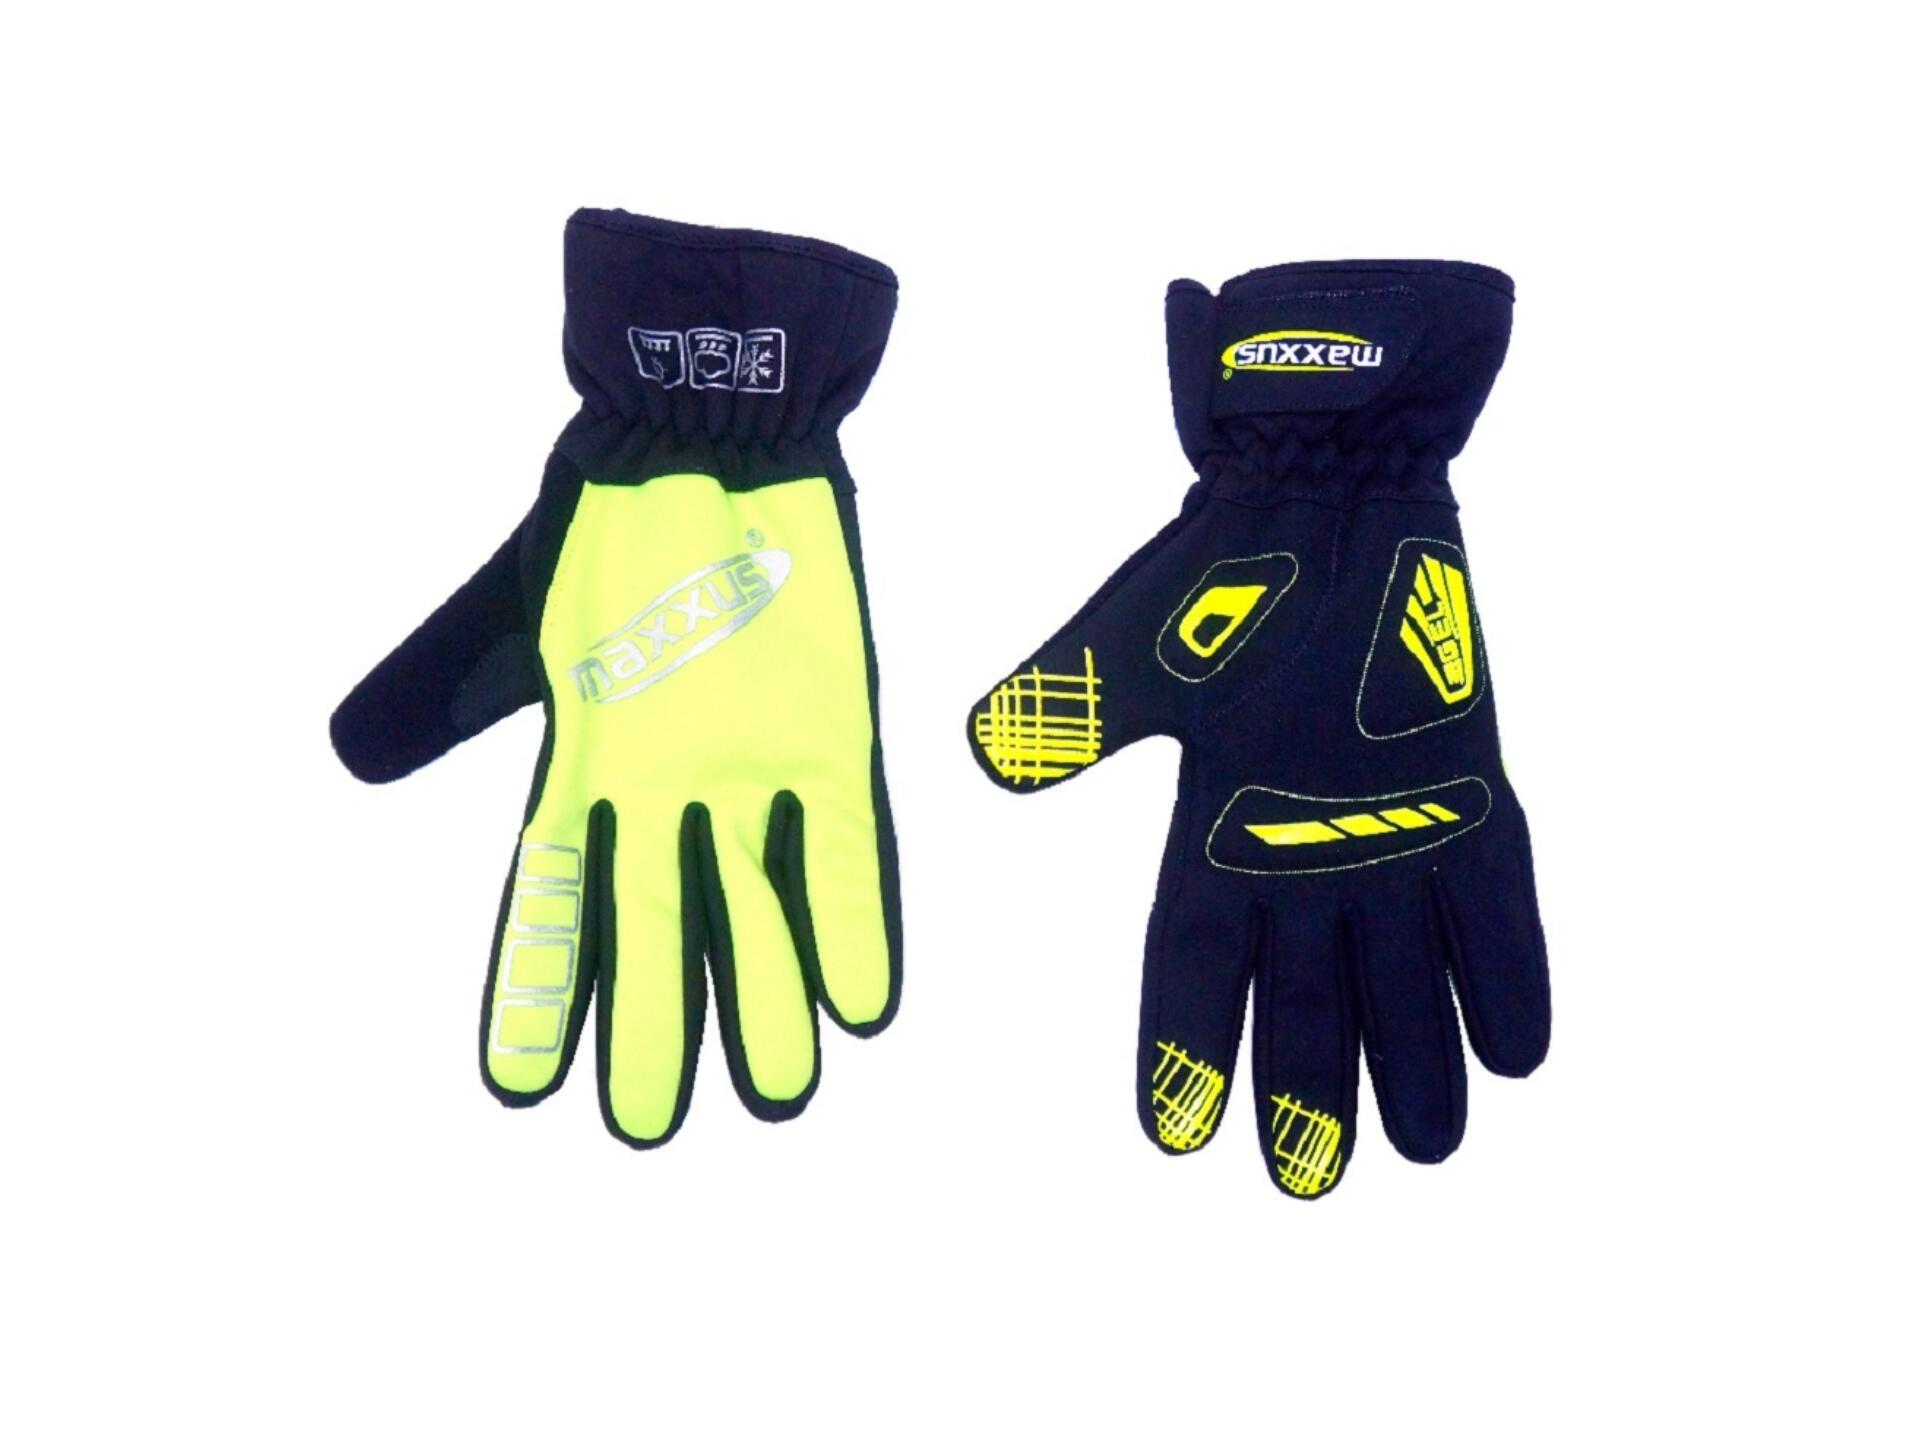 Maxxus Reflex gants de vélo L jaune/noir